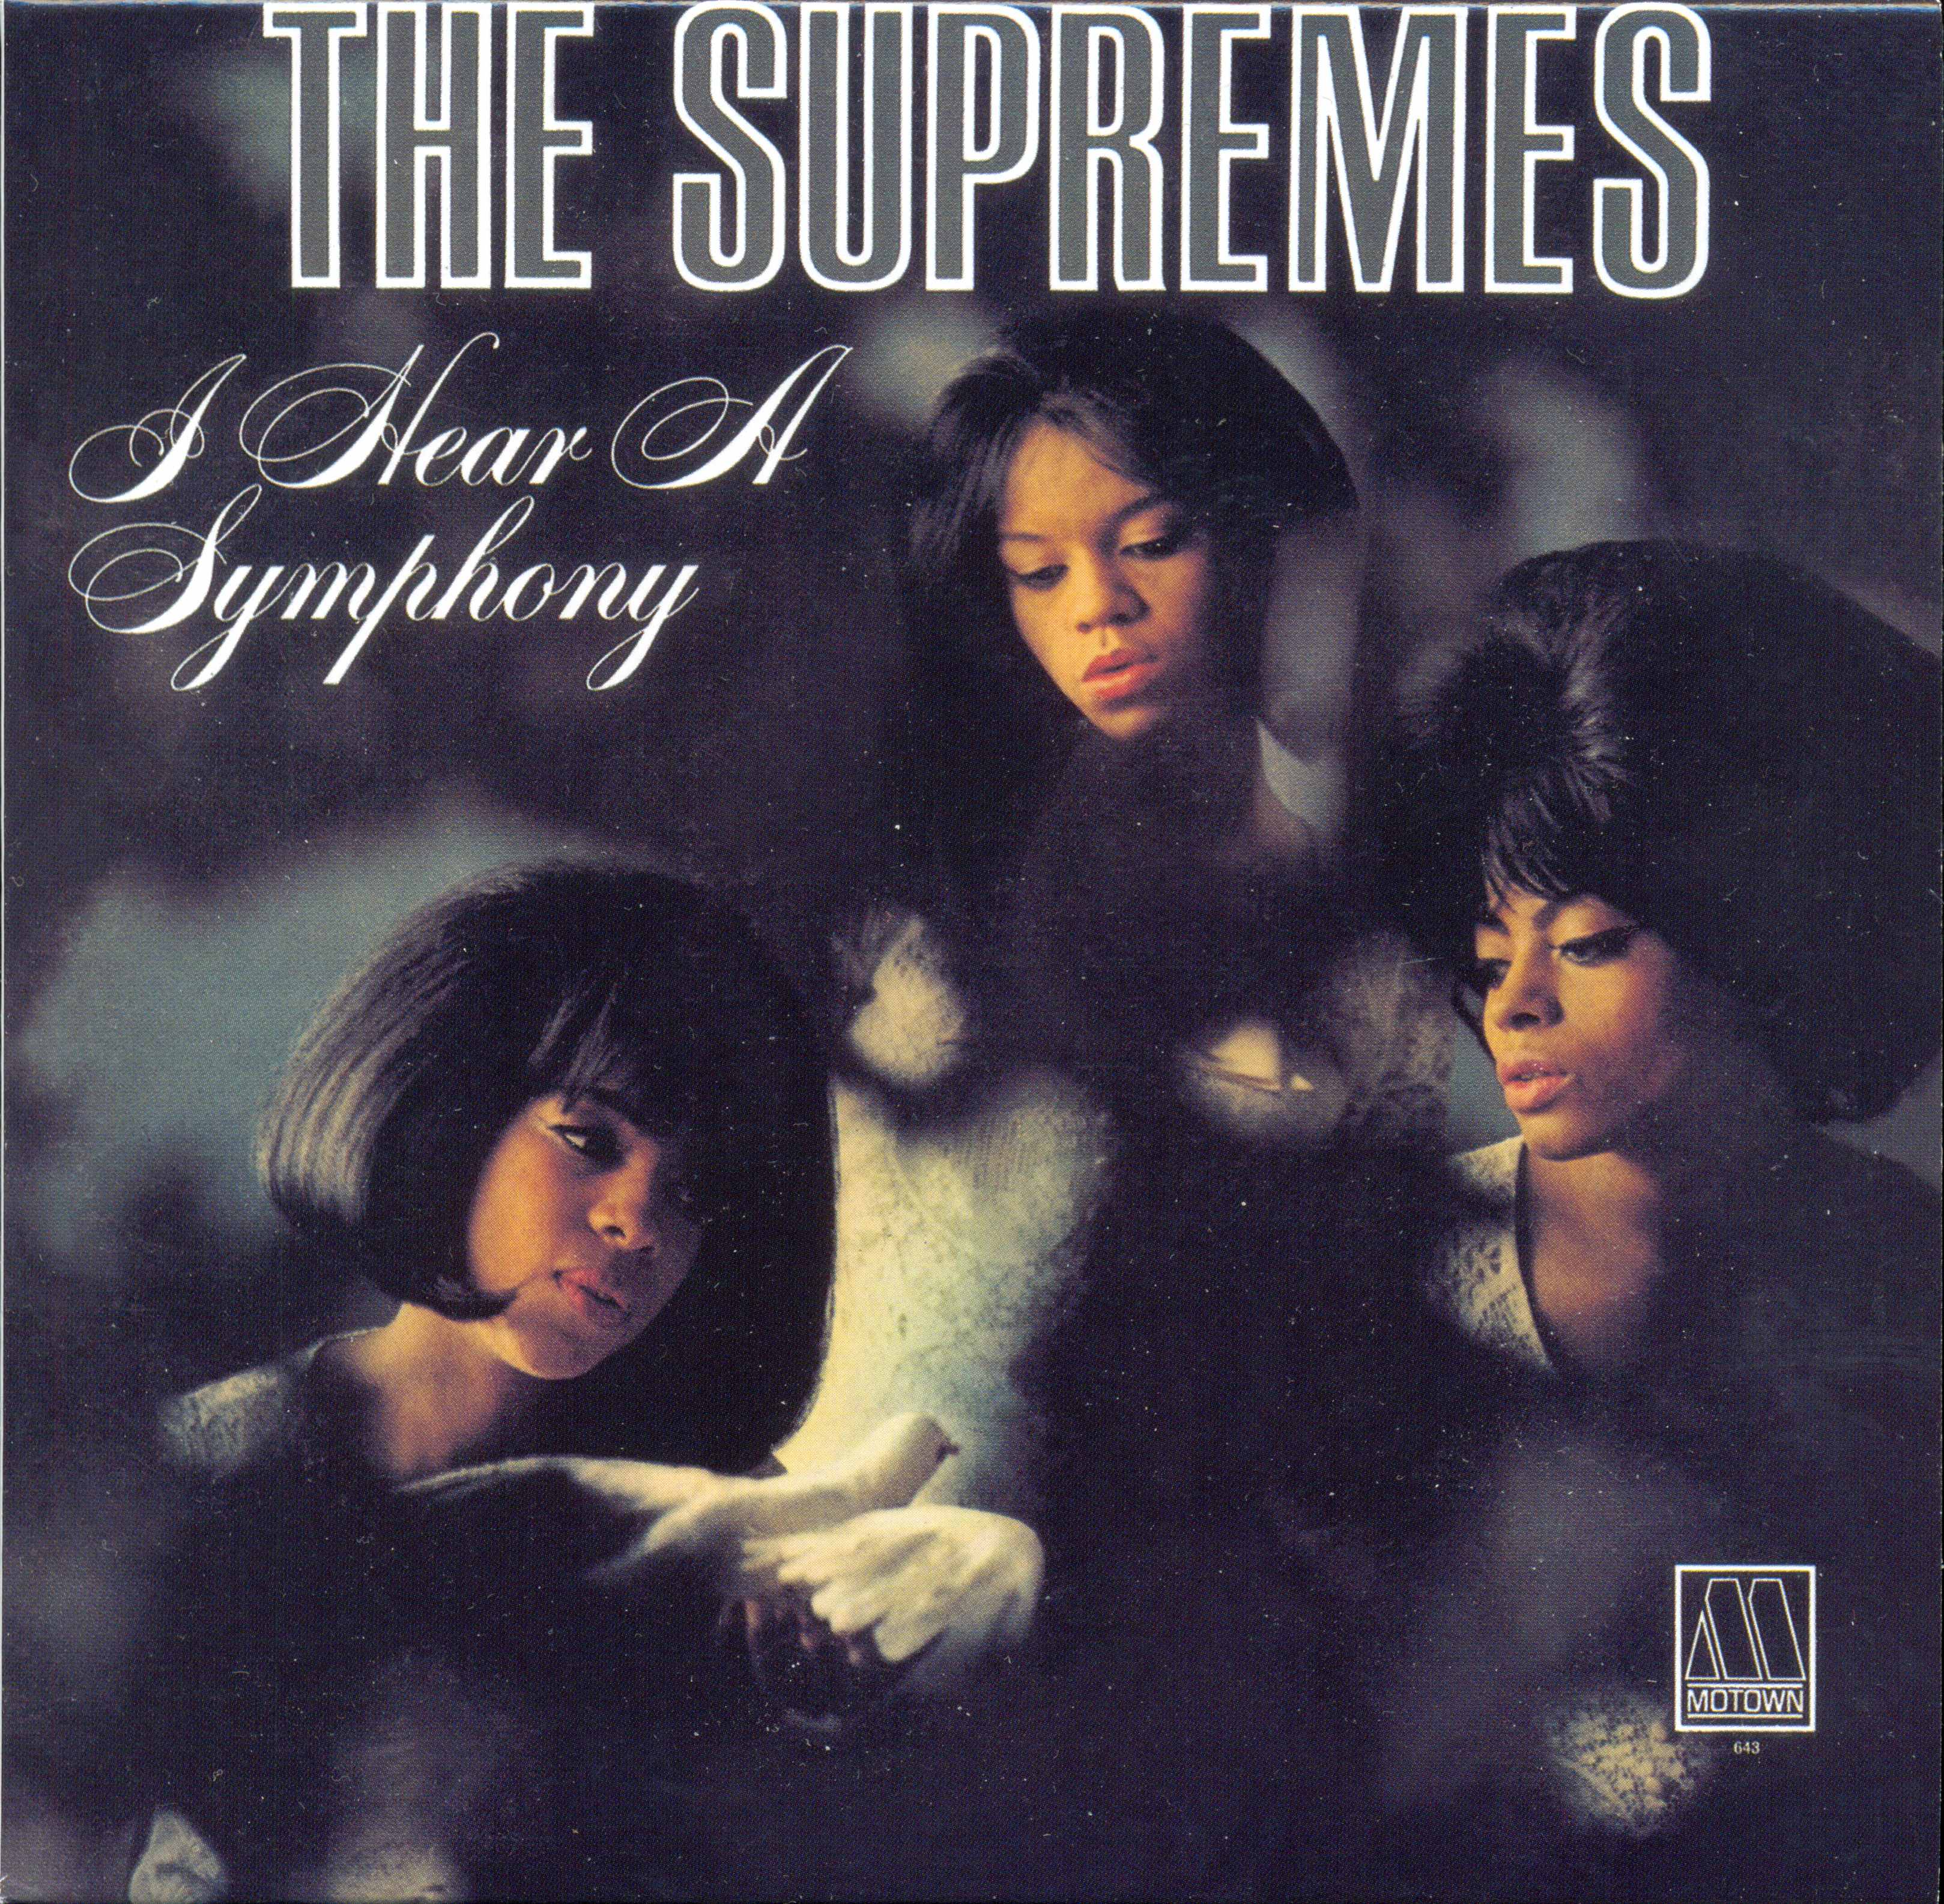 1966 - The Supremes - I Hear A Symphony